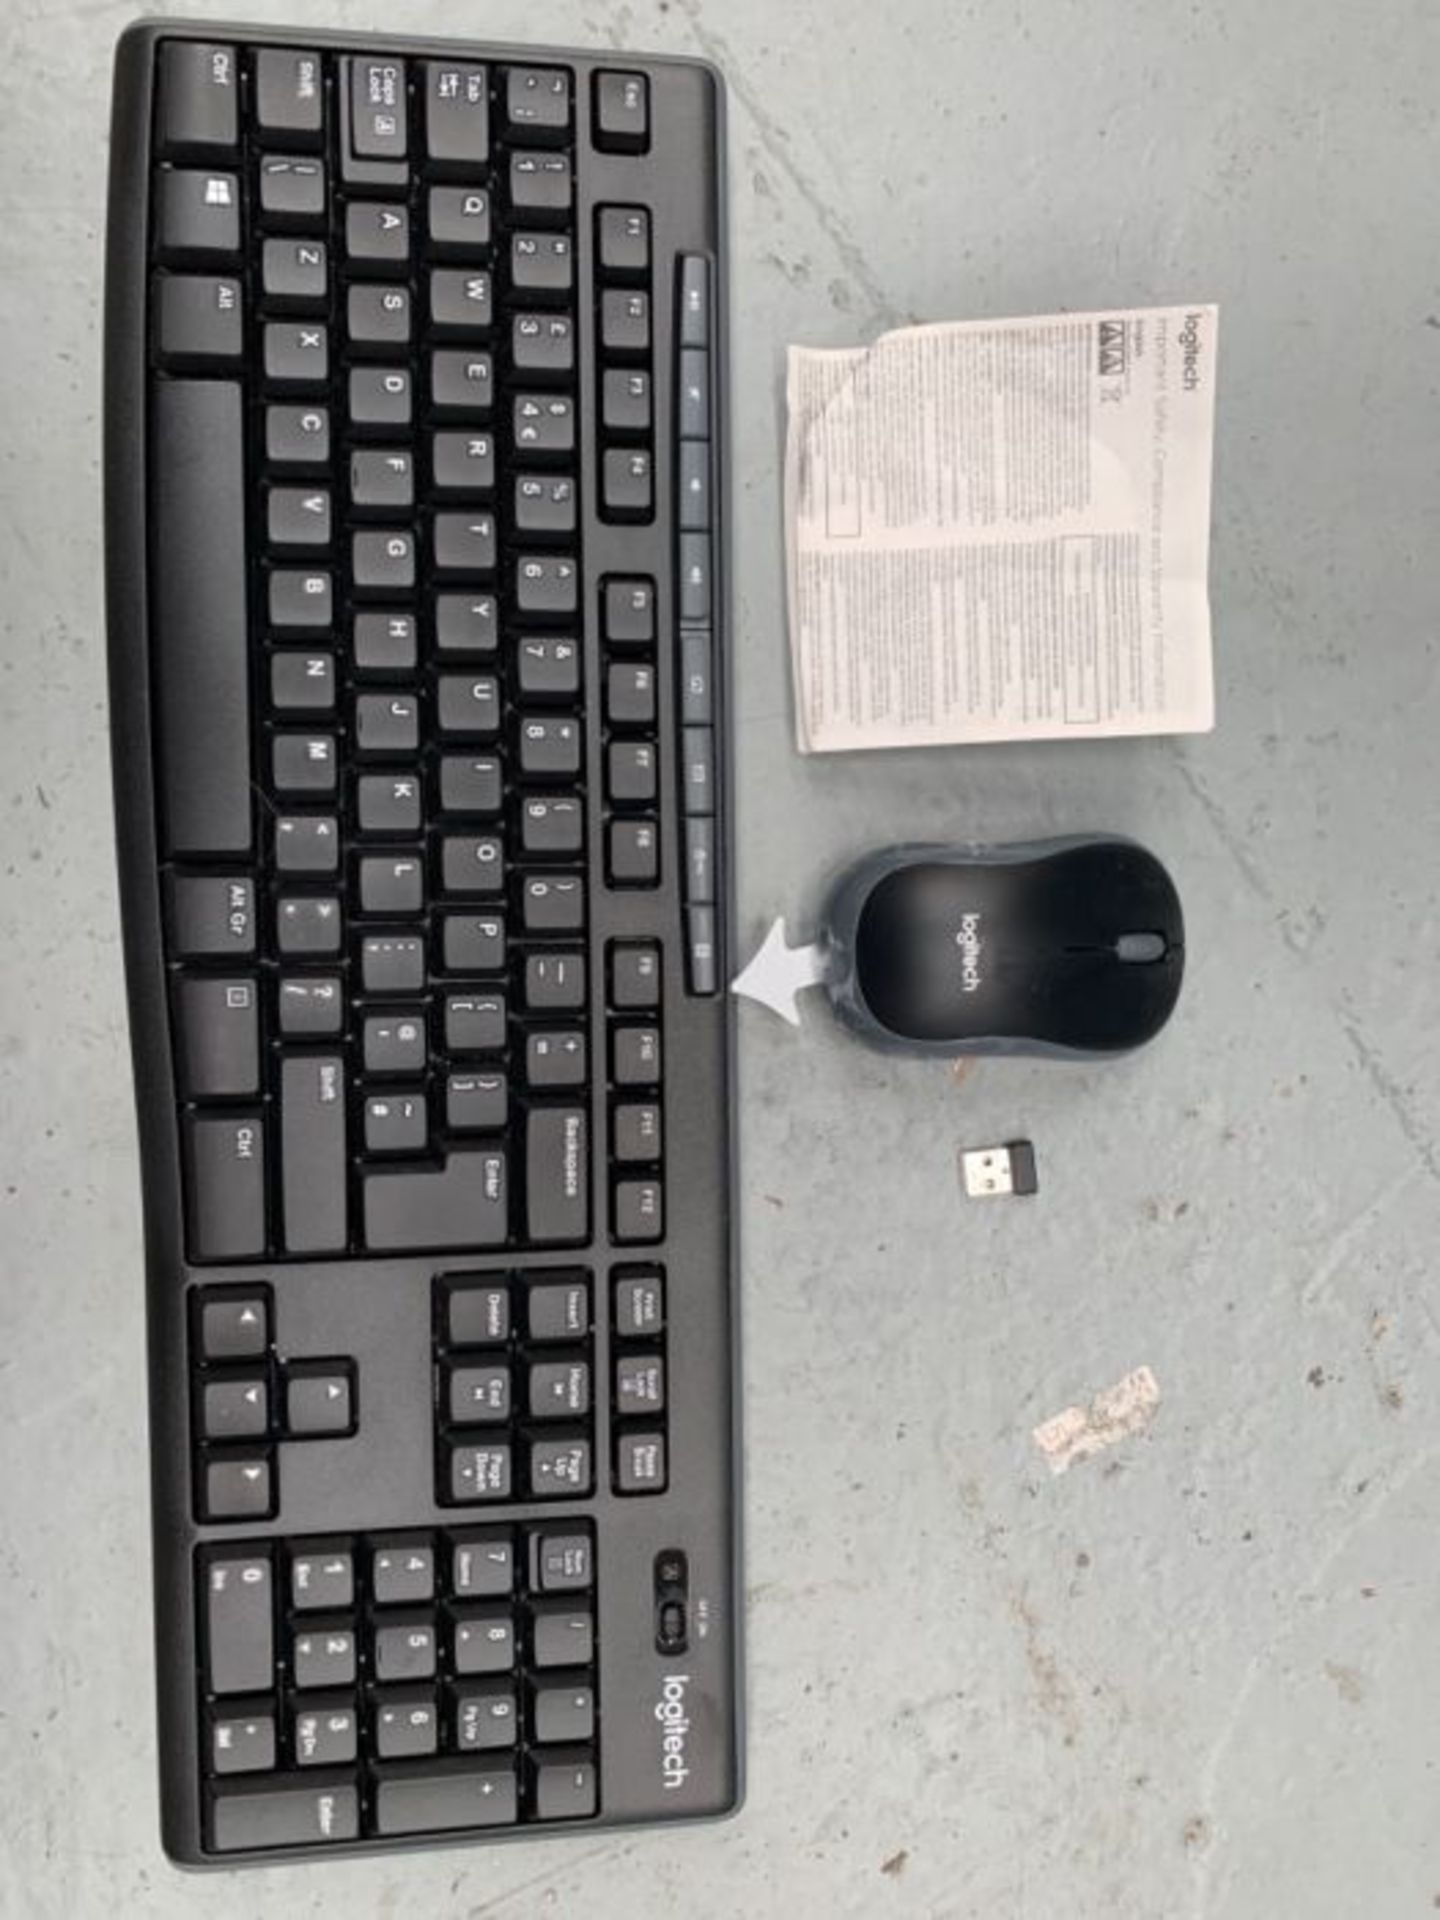 Logitech MK270 Wireless Keyboard and Mouse Combo for Windows, 2.4 GHz Wireless, Compac - Bild 3 aus 3